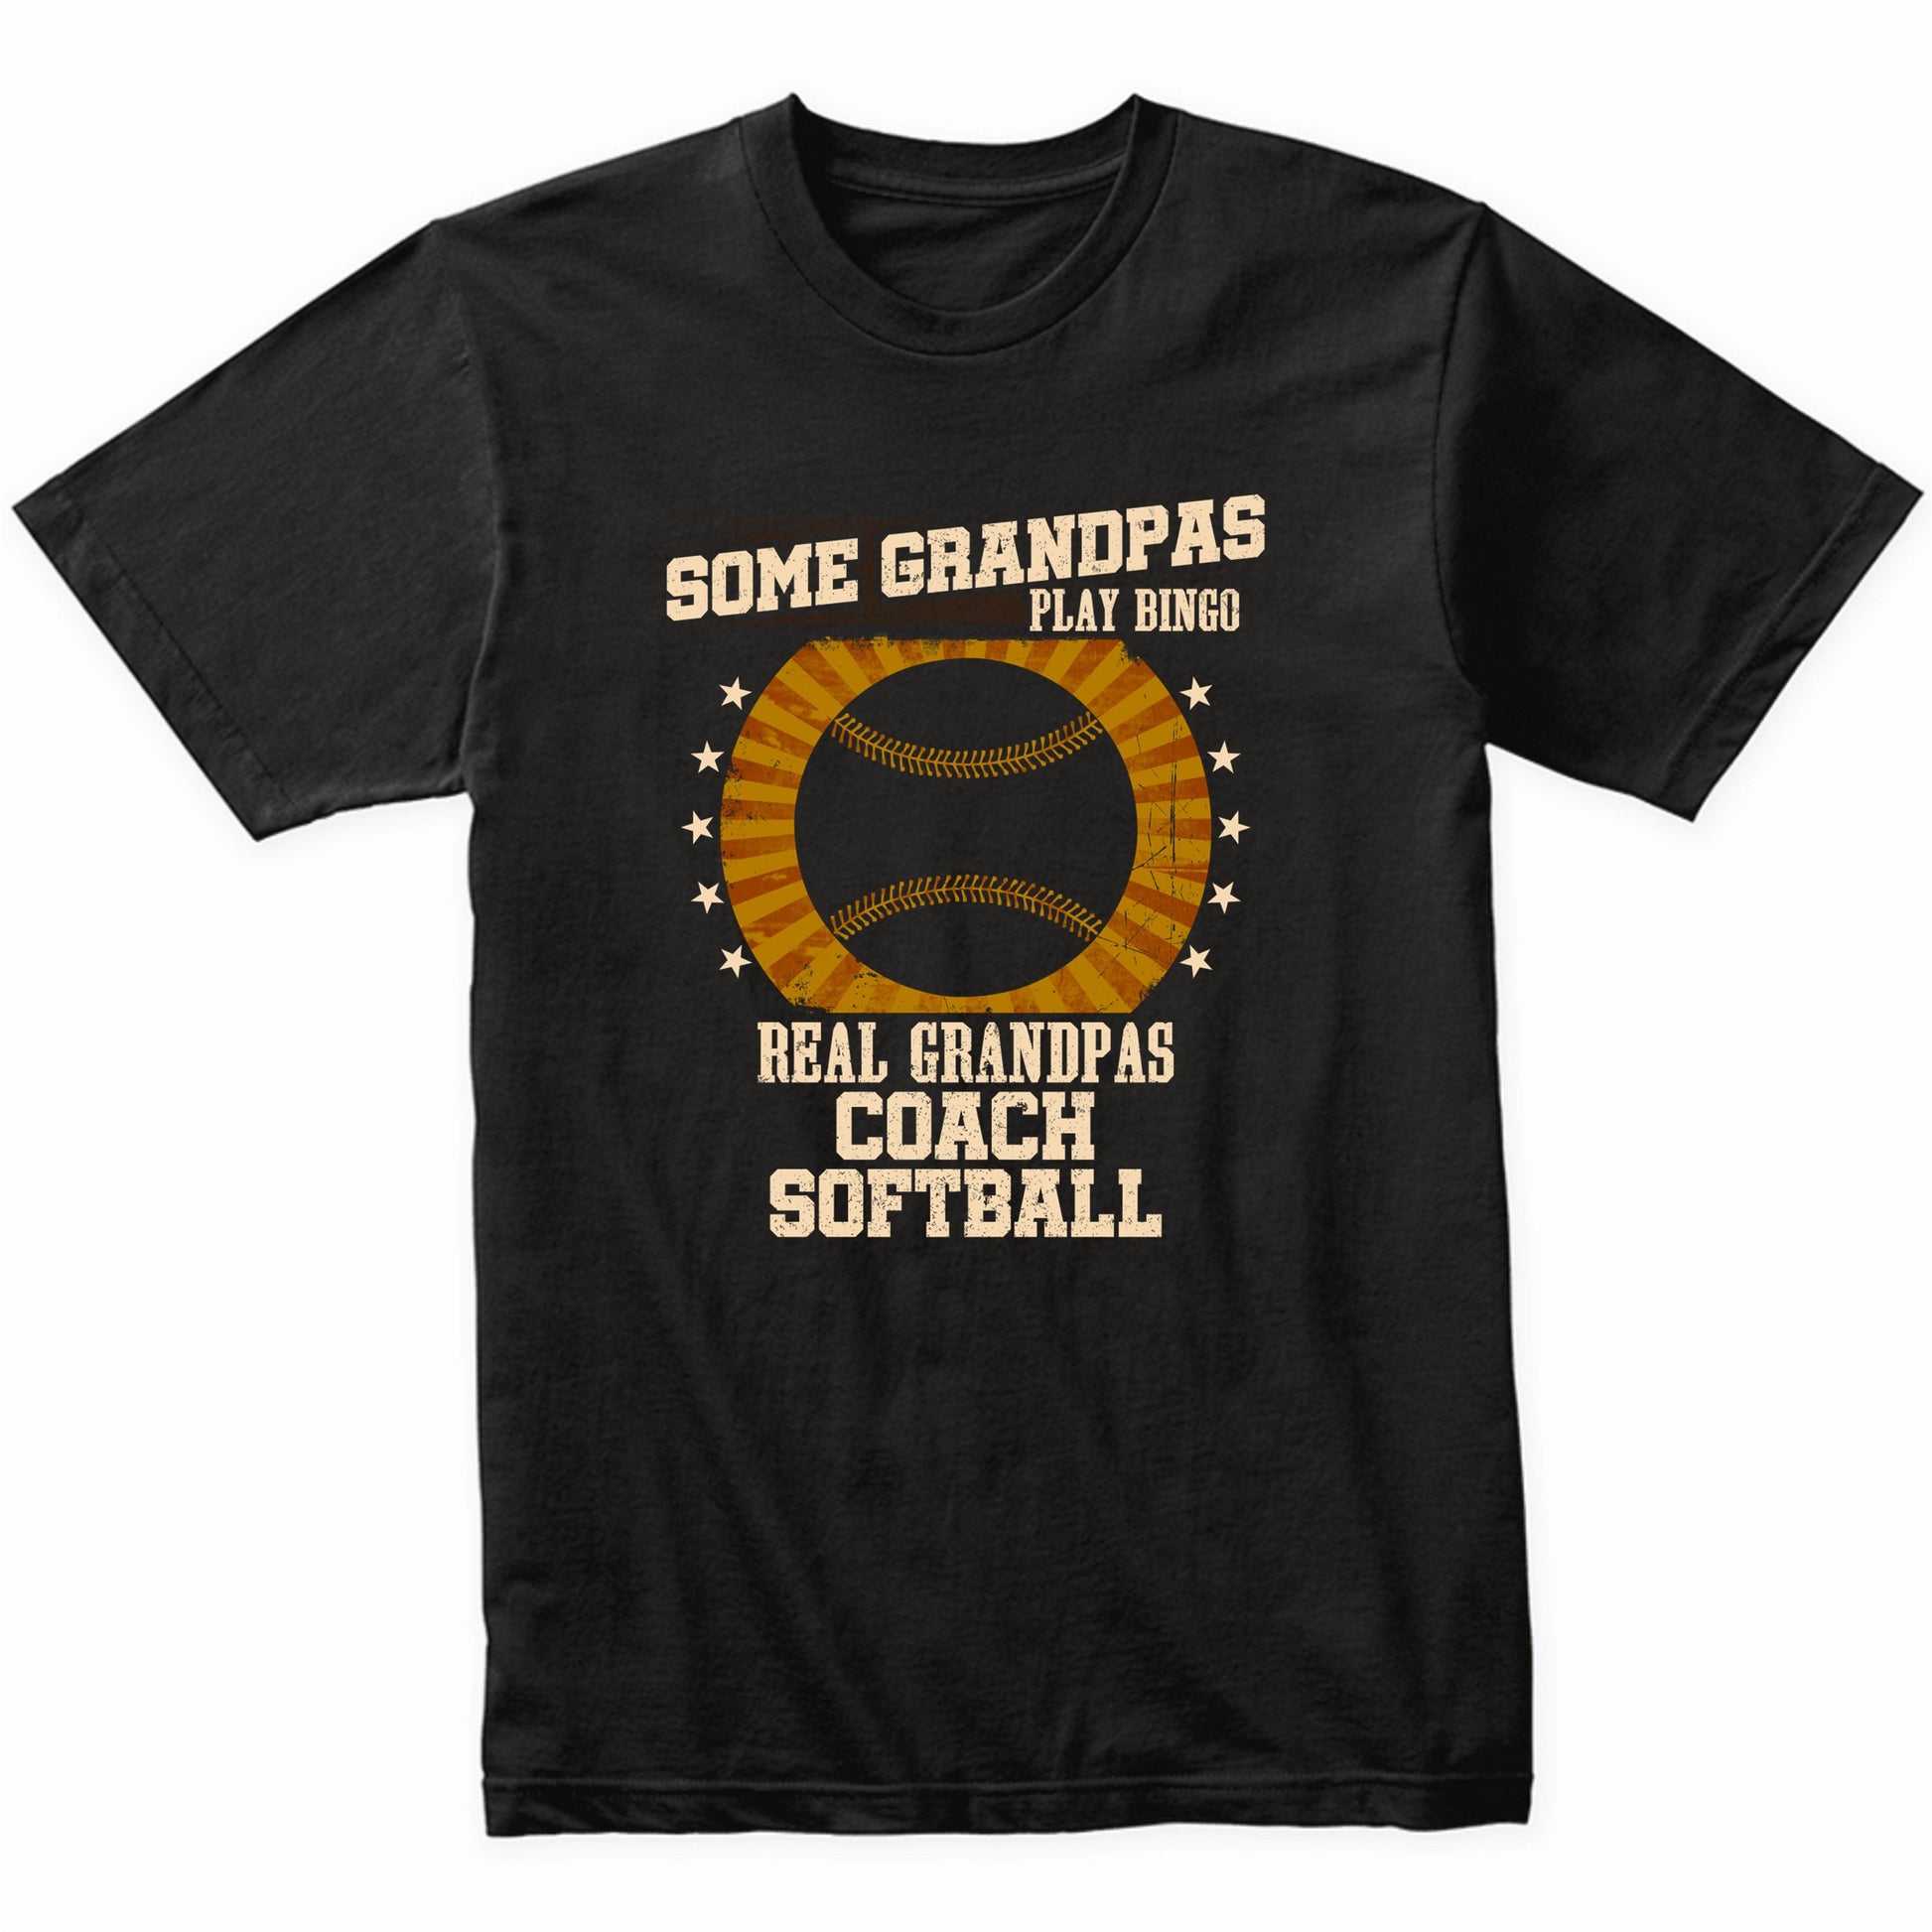 Softball Grandpa Shirt - Real Grandpas Coach Softball T-Shirt